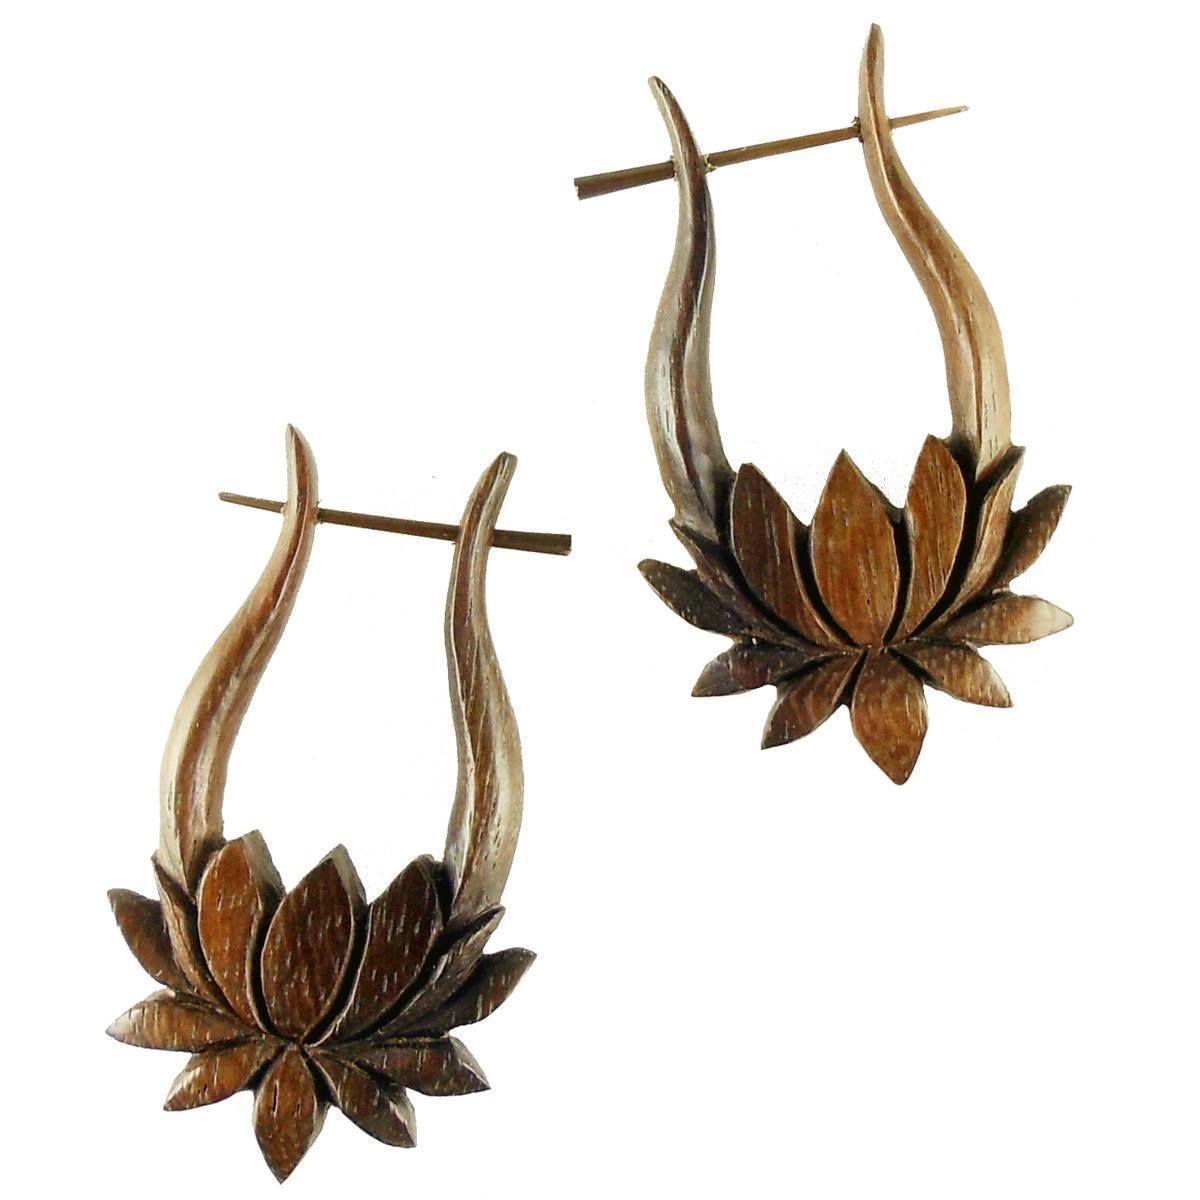 Natural Jewelry :|: Lotus. Wooden Earrings, Rosewood. 1 1/4 inch W x 2 inch L. | Wood Earrings